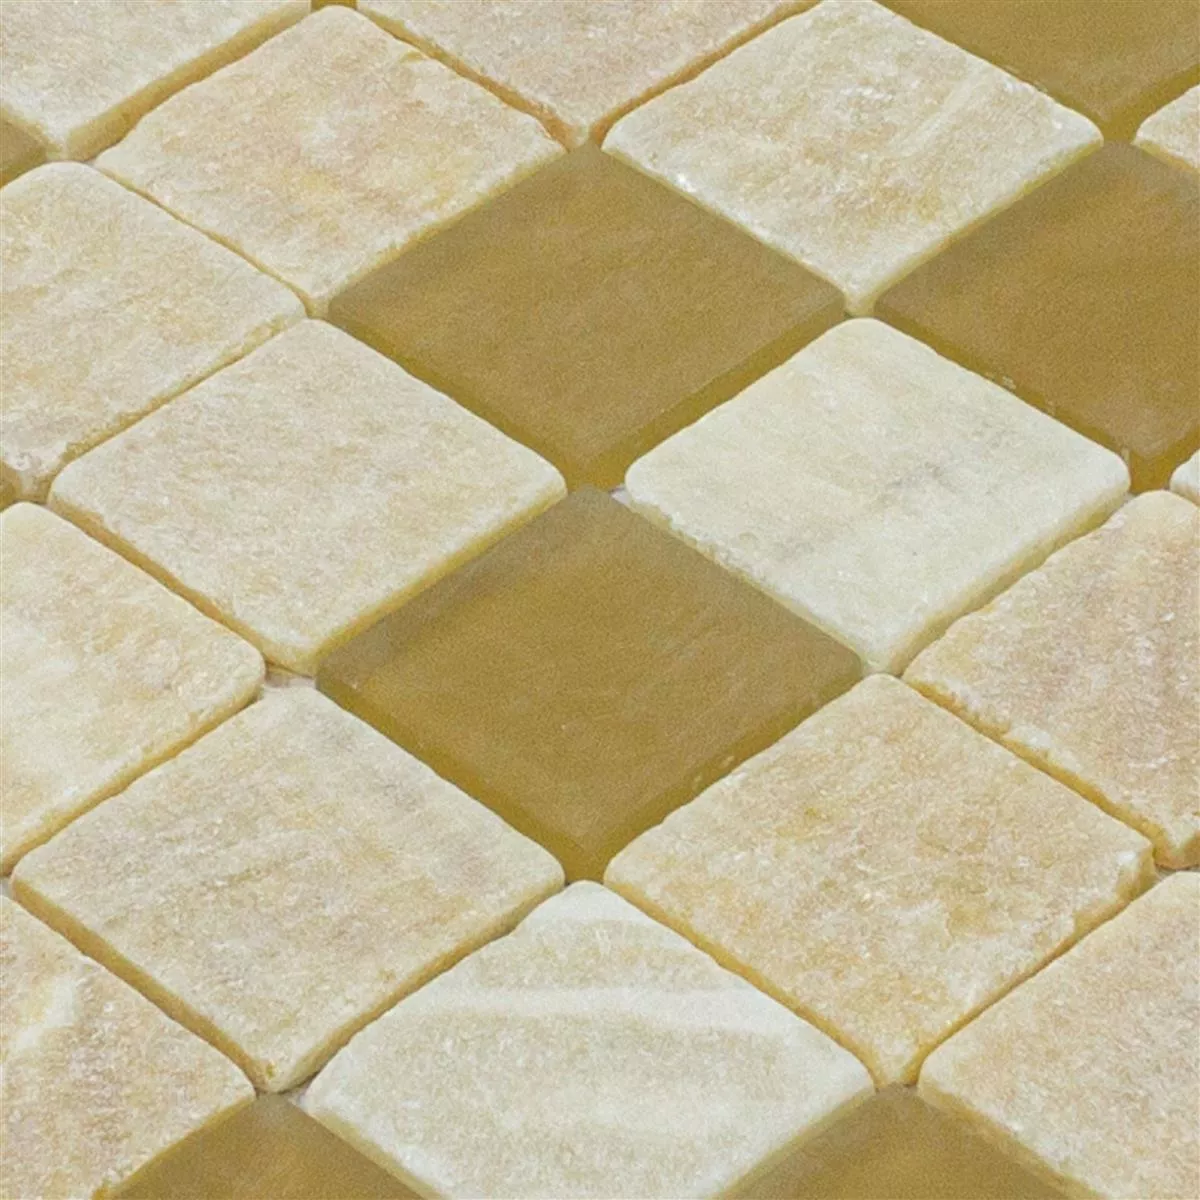 Mozaik Staklo Prirodni Kamen Pločice Aurelius Smeđa Bež Mix